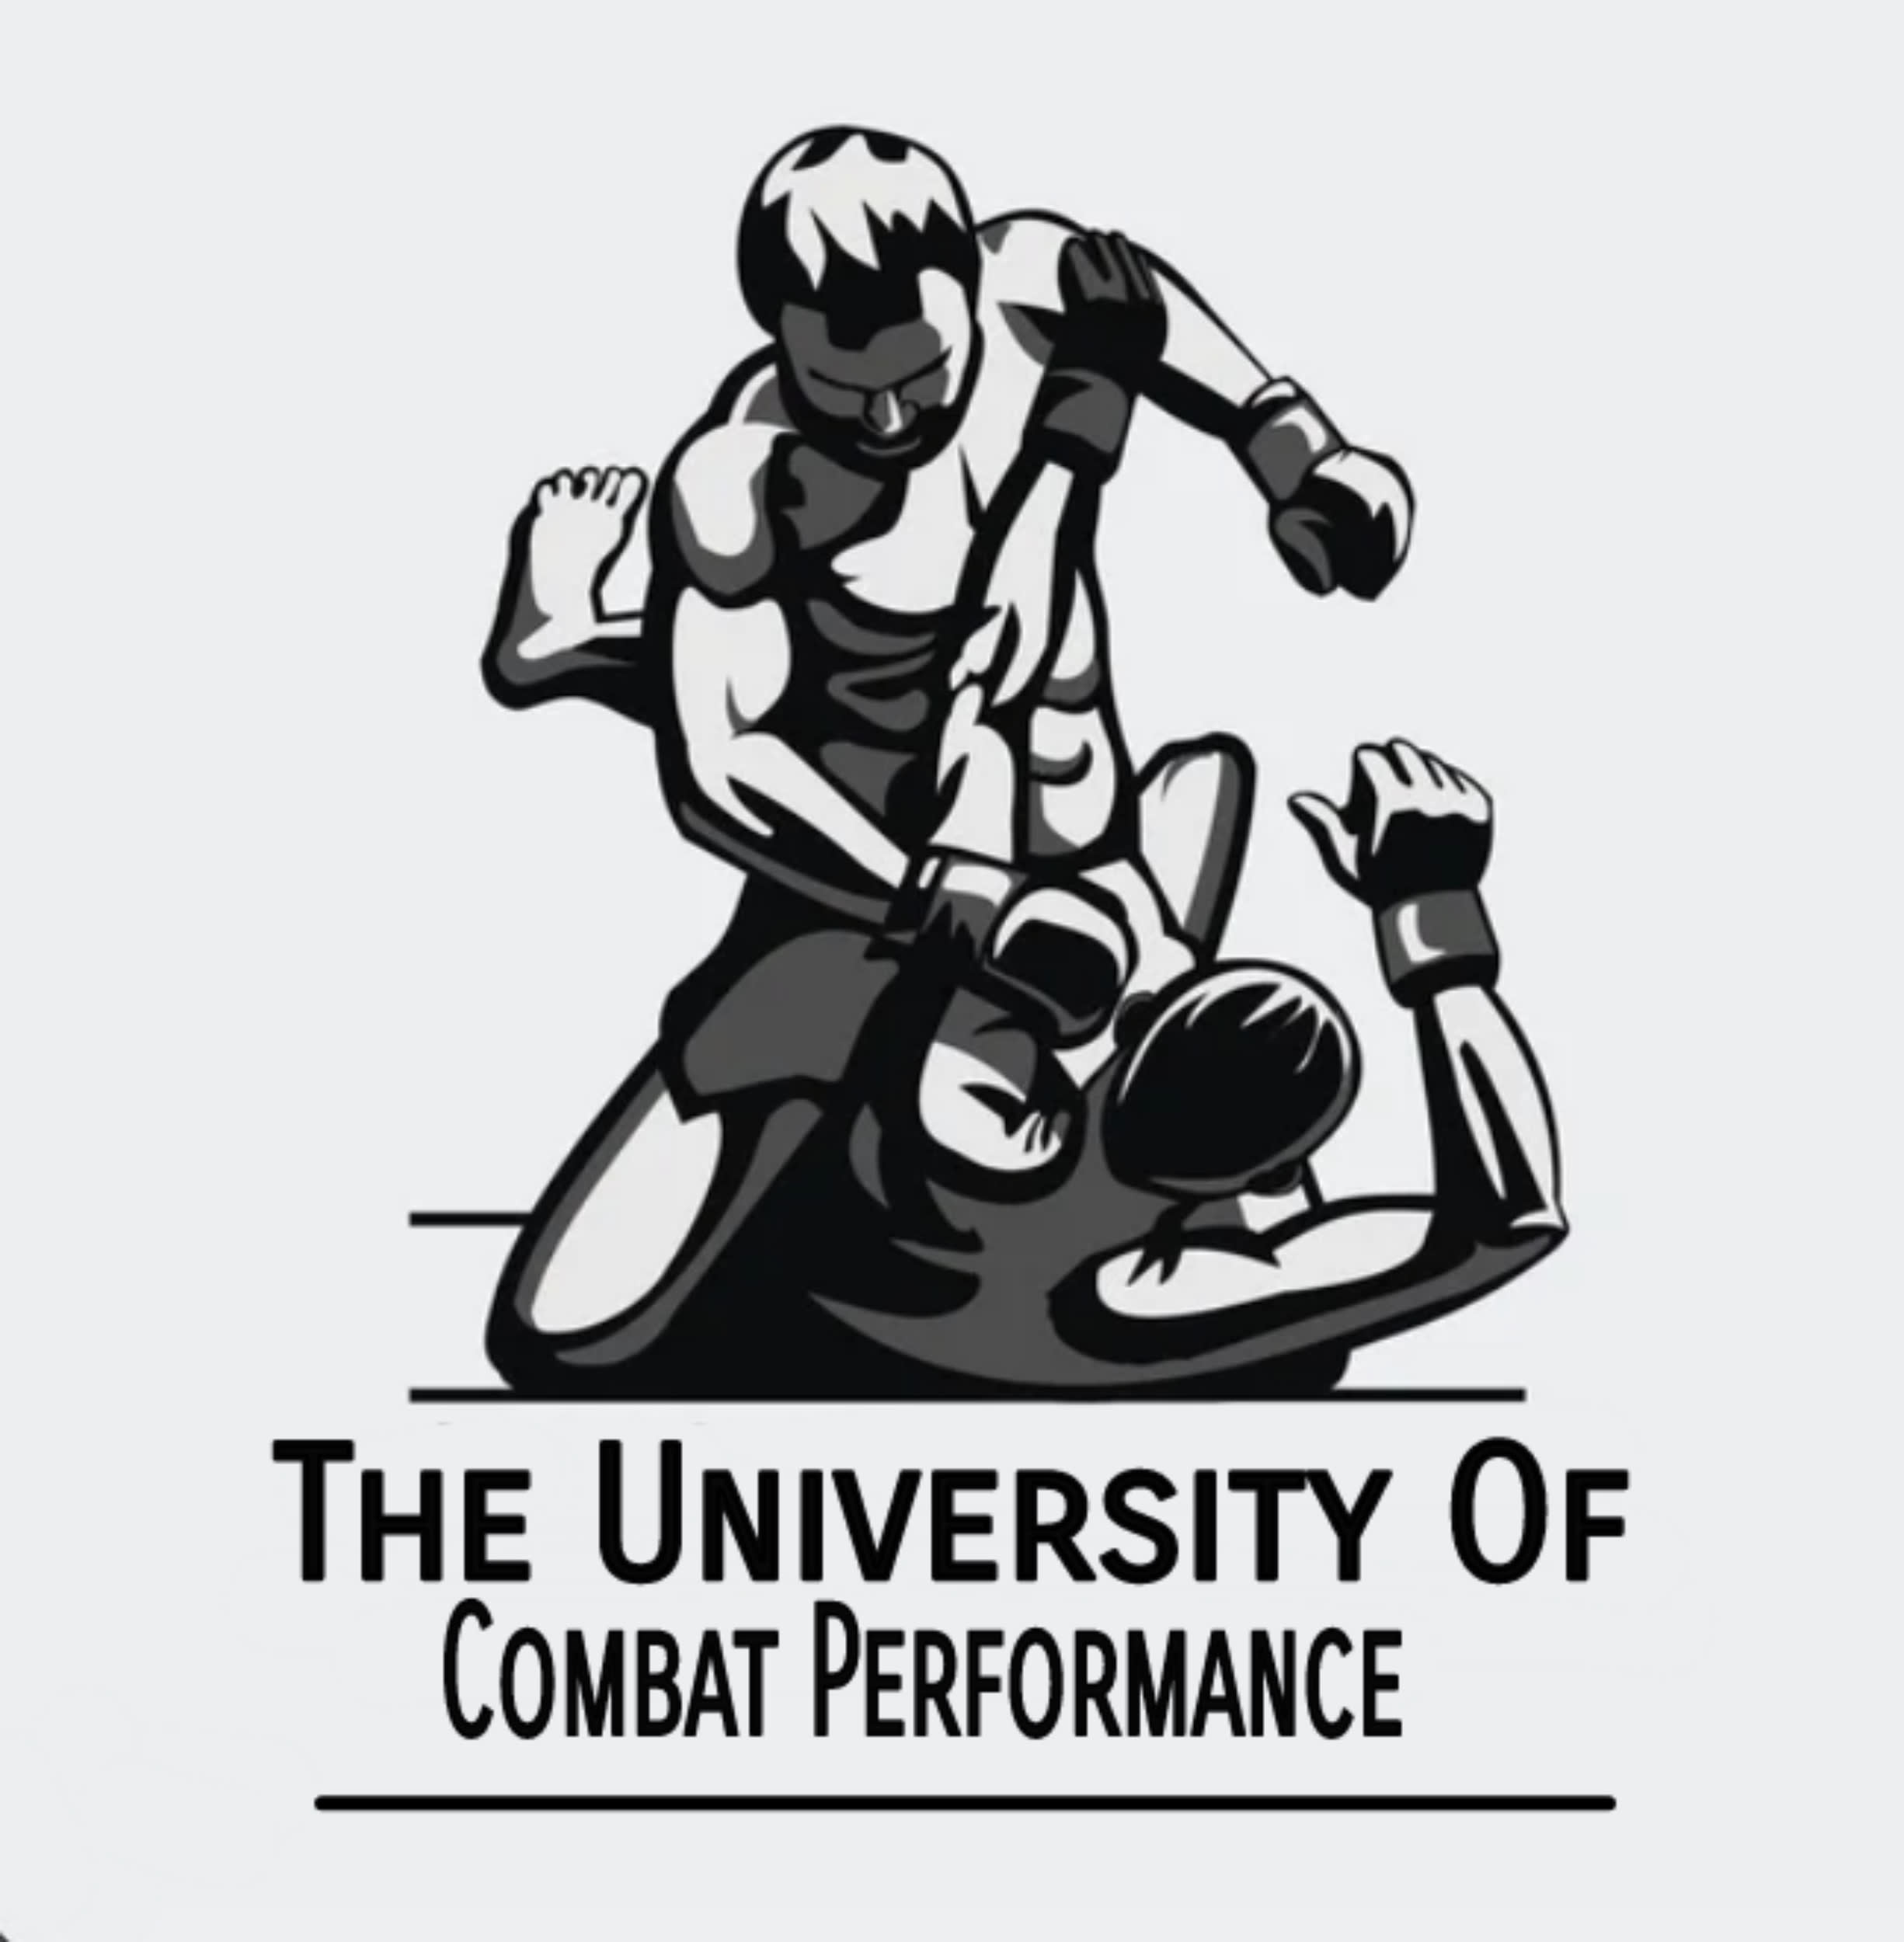 The University of Combat Performance